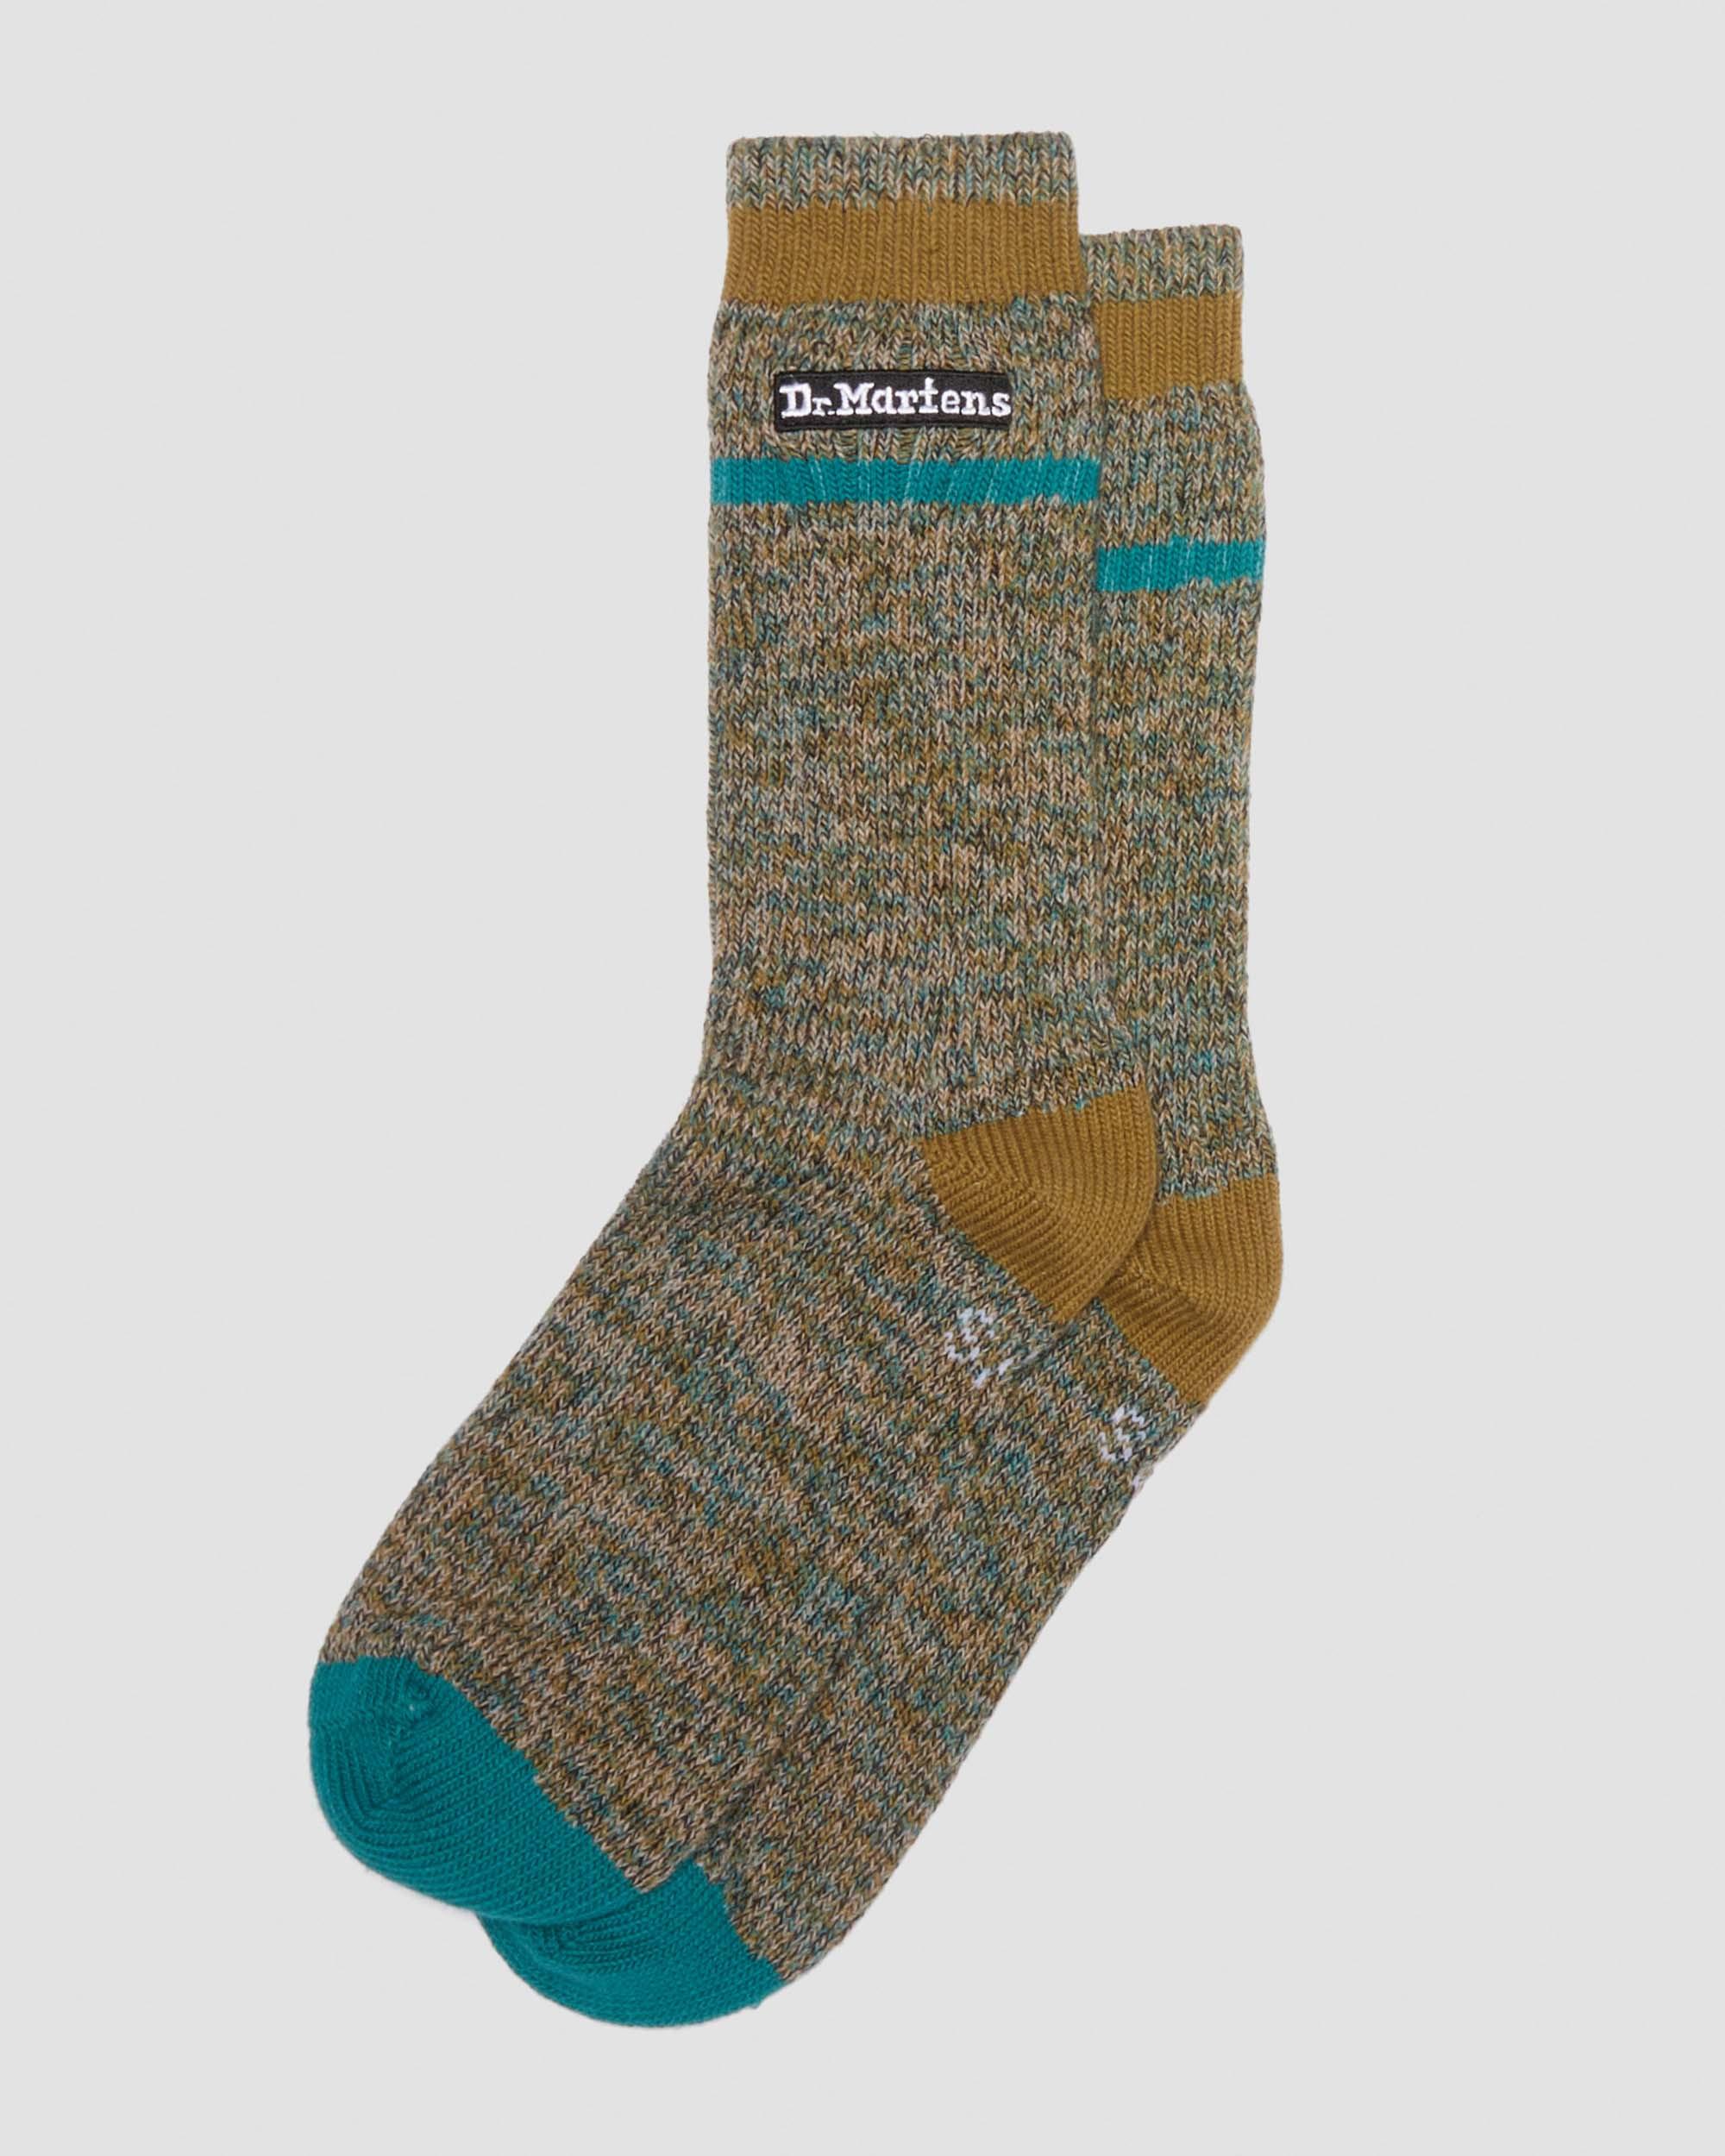 Martens Organic Dr. | Vintage Marl Socks in Taupe